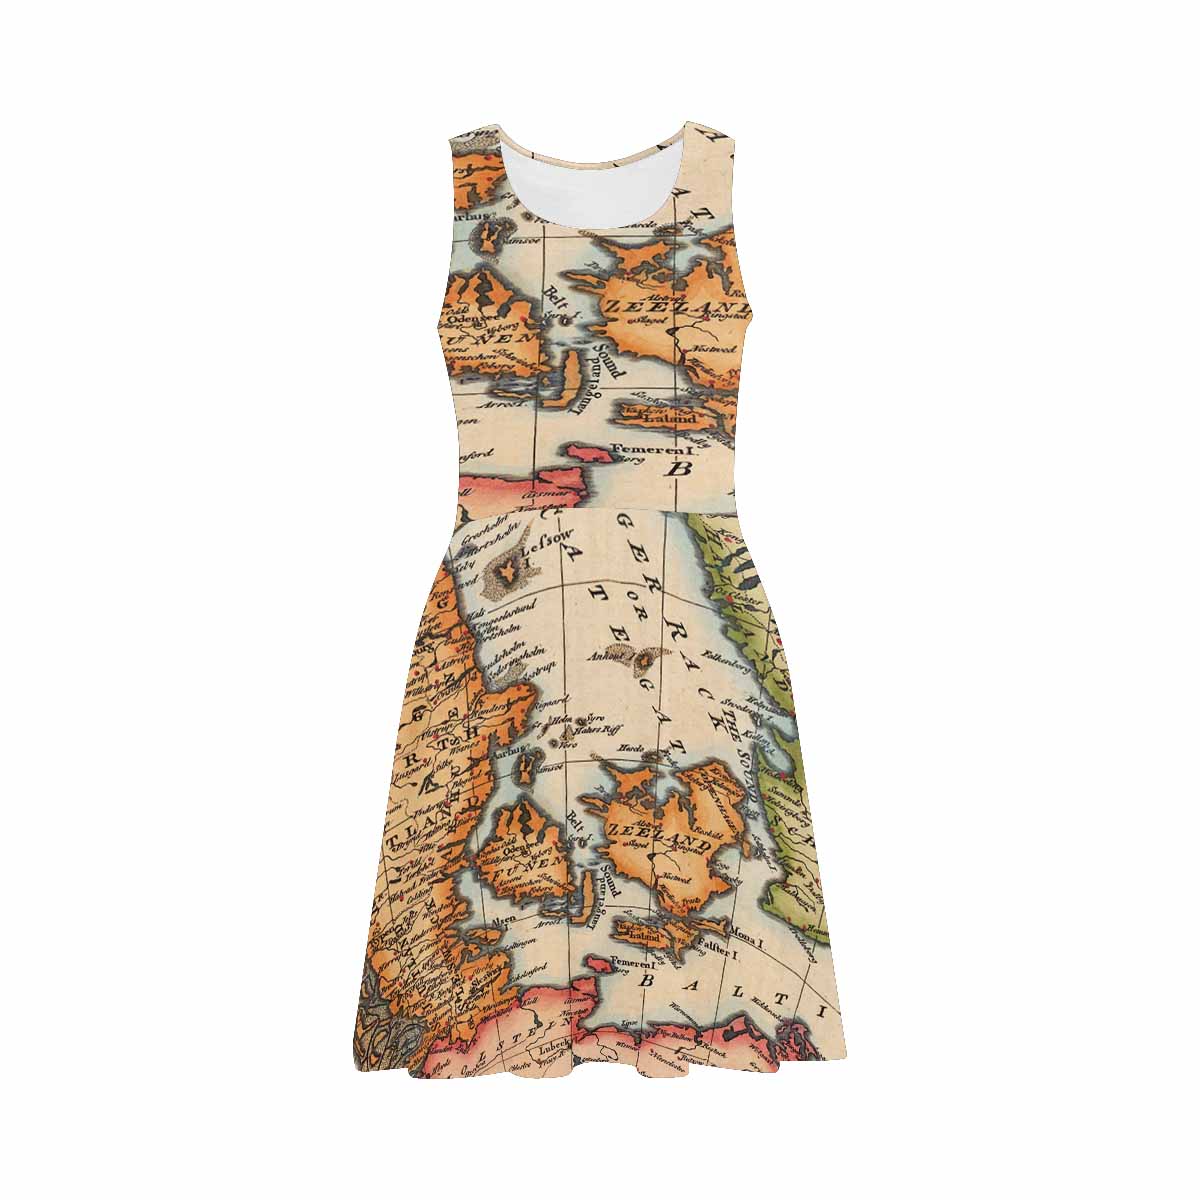 Antique Map casual summer dress, MODEL 09534, design 28